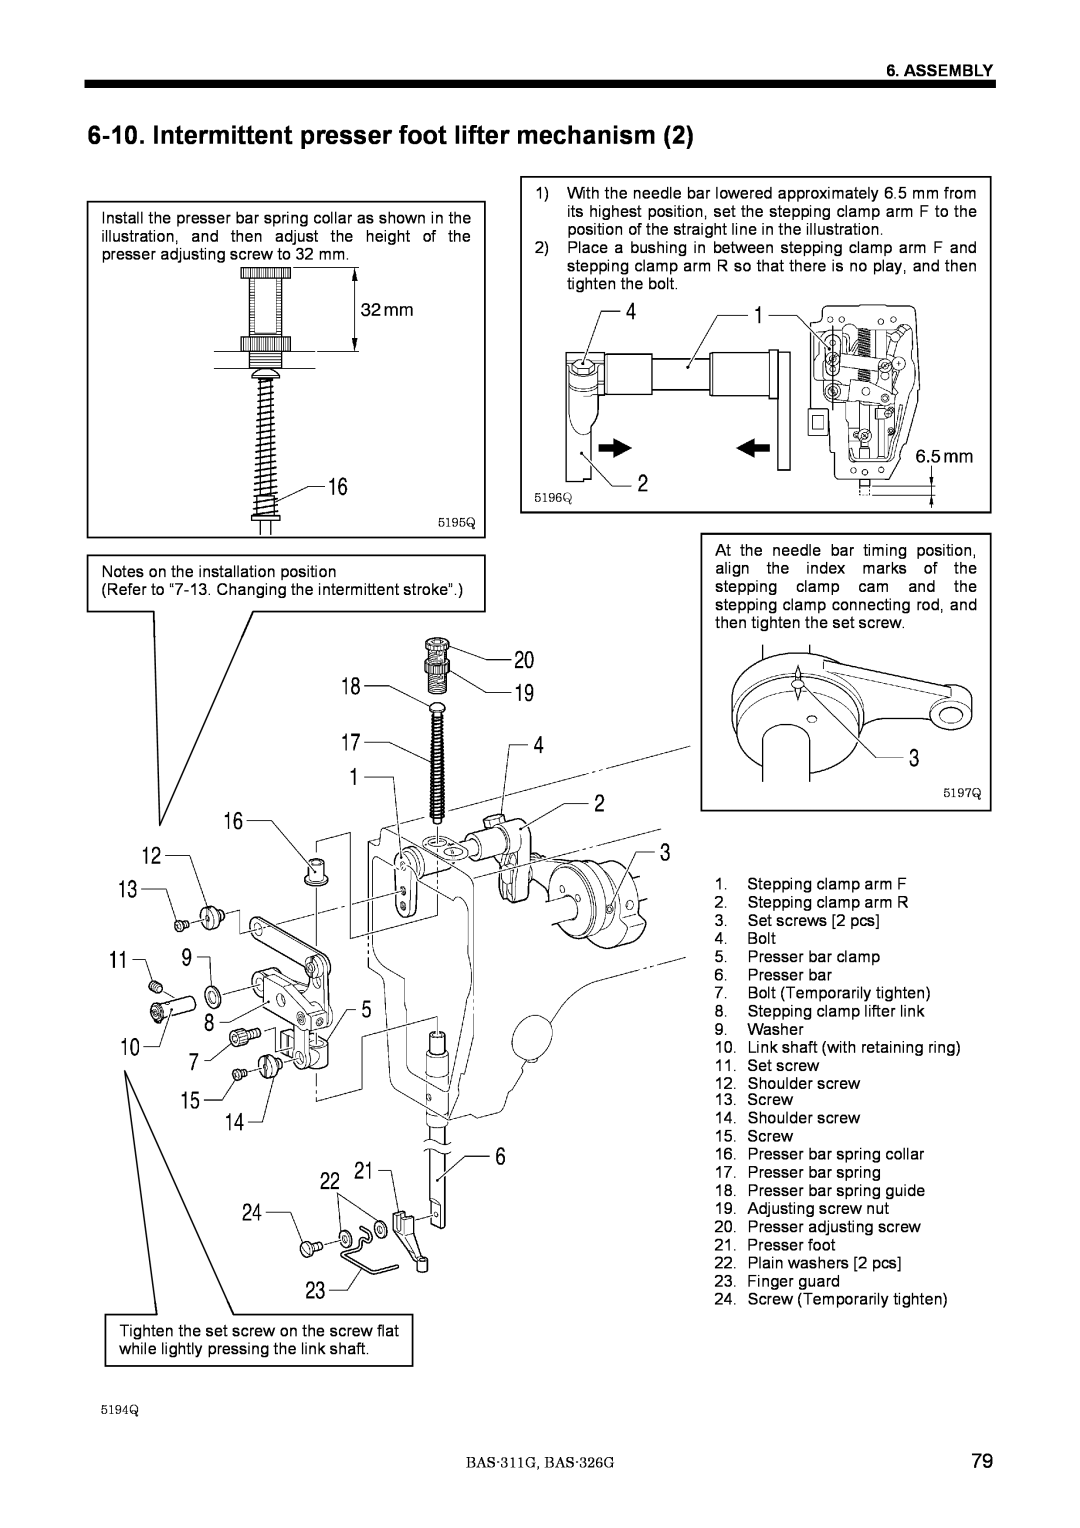 Brother BAS-311G service manual Intermittent presser foot lifter mechanism, Assembly 